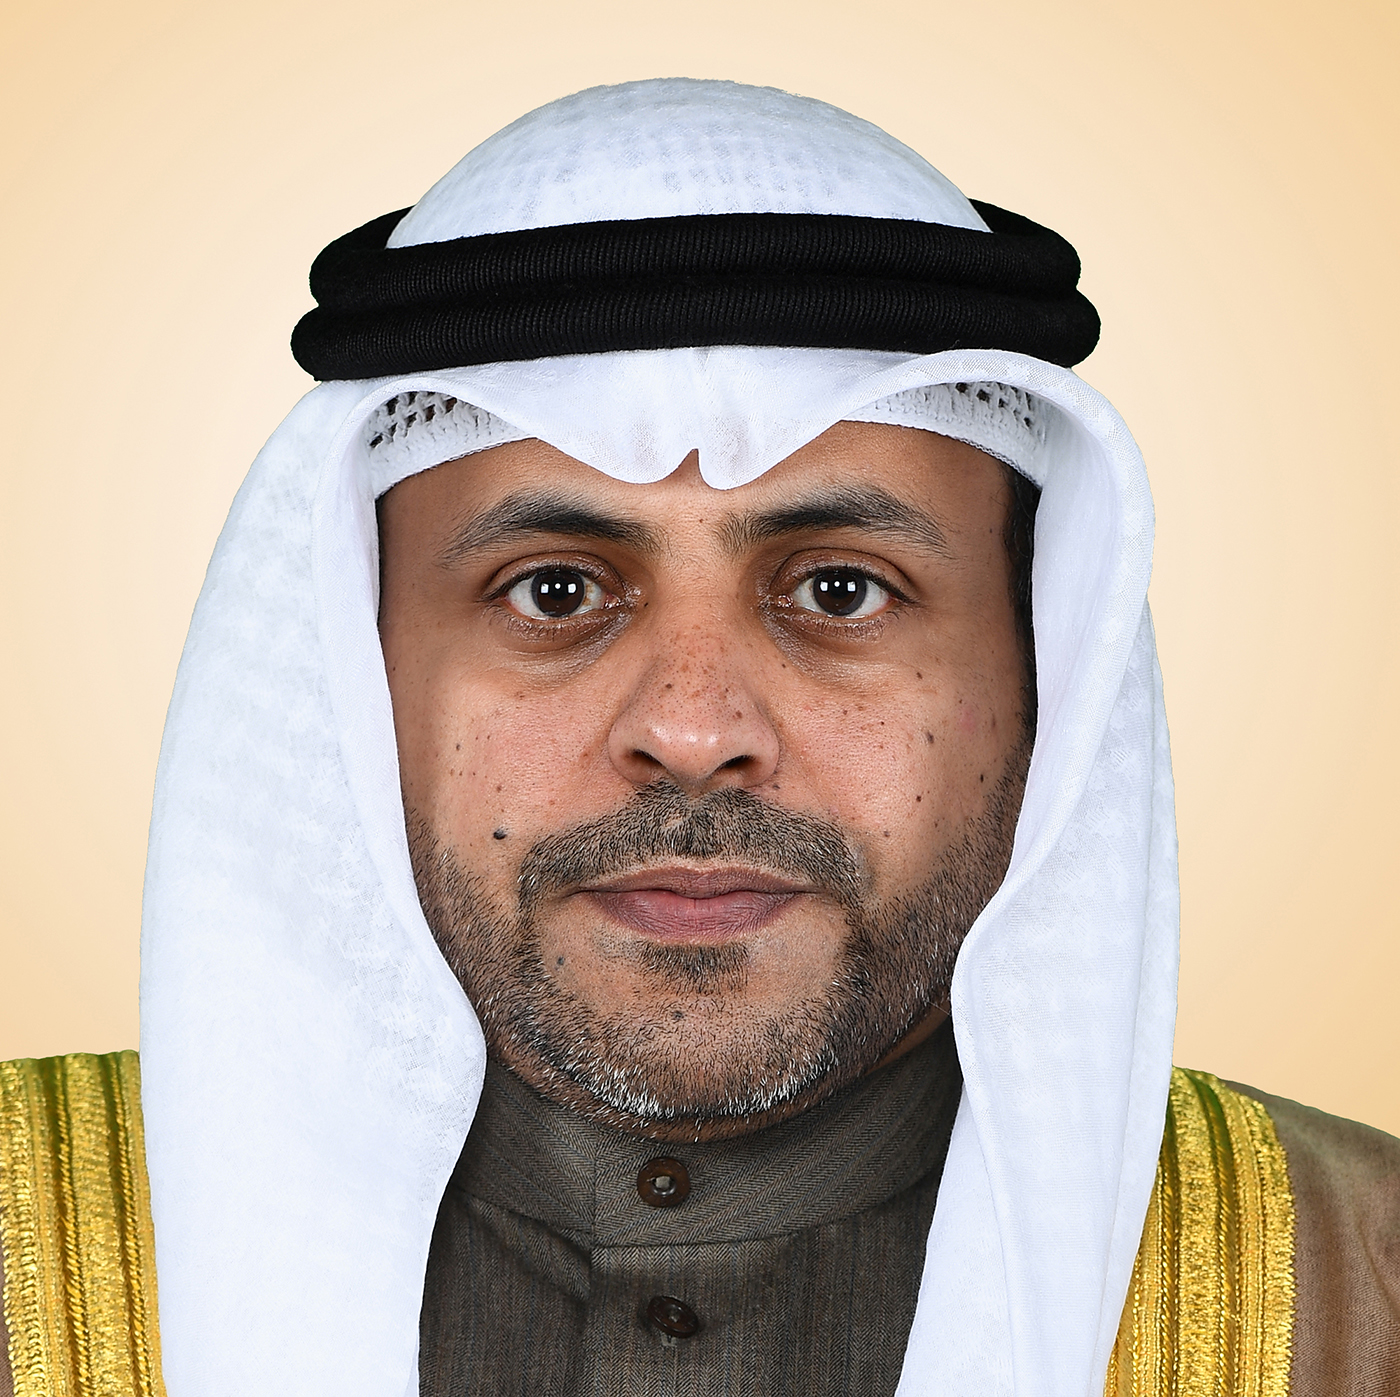 Minister of Information Mohammad Al-Jabri